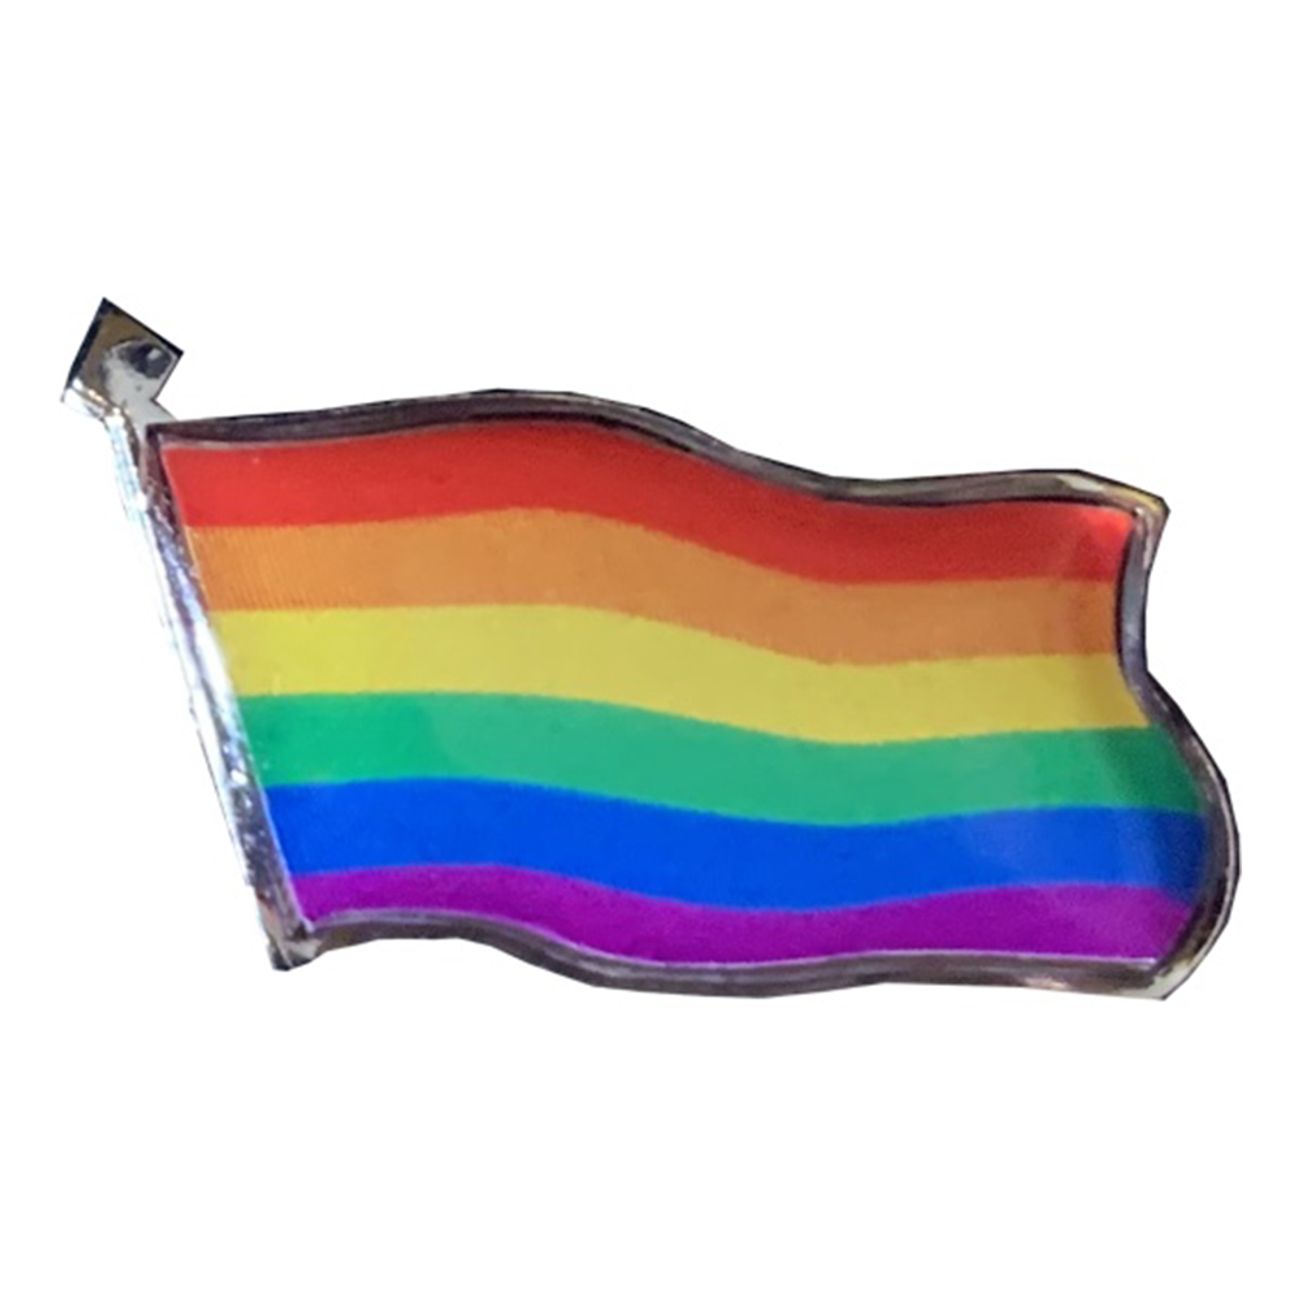 pin-prideflagga2-1